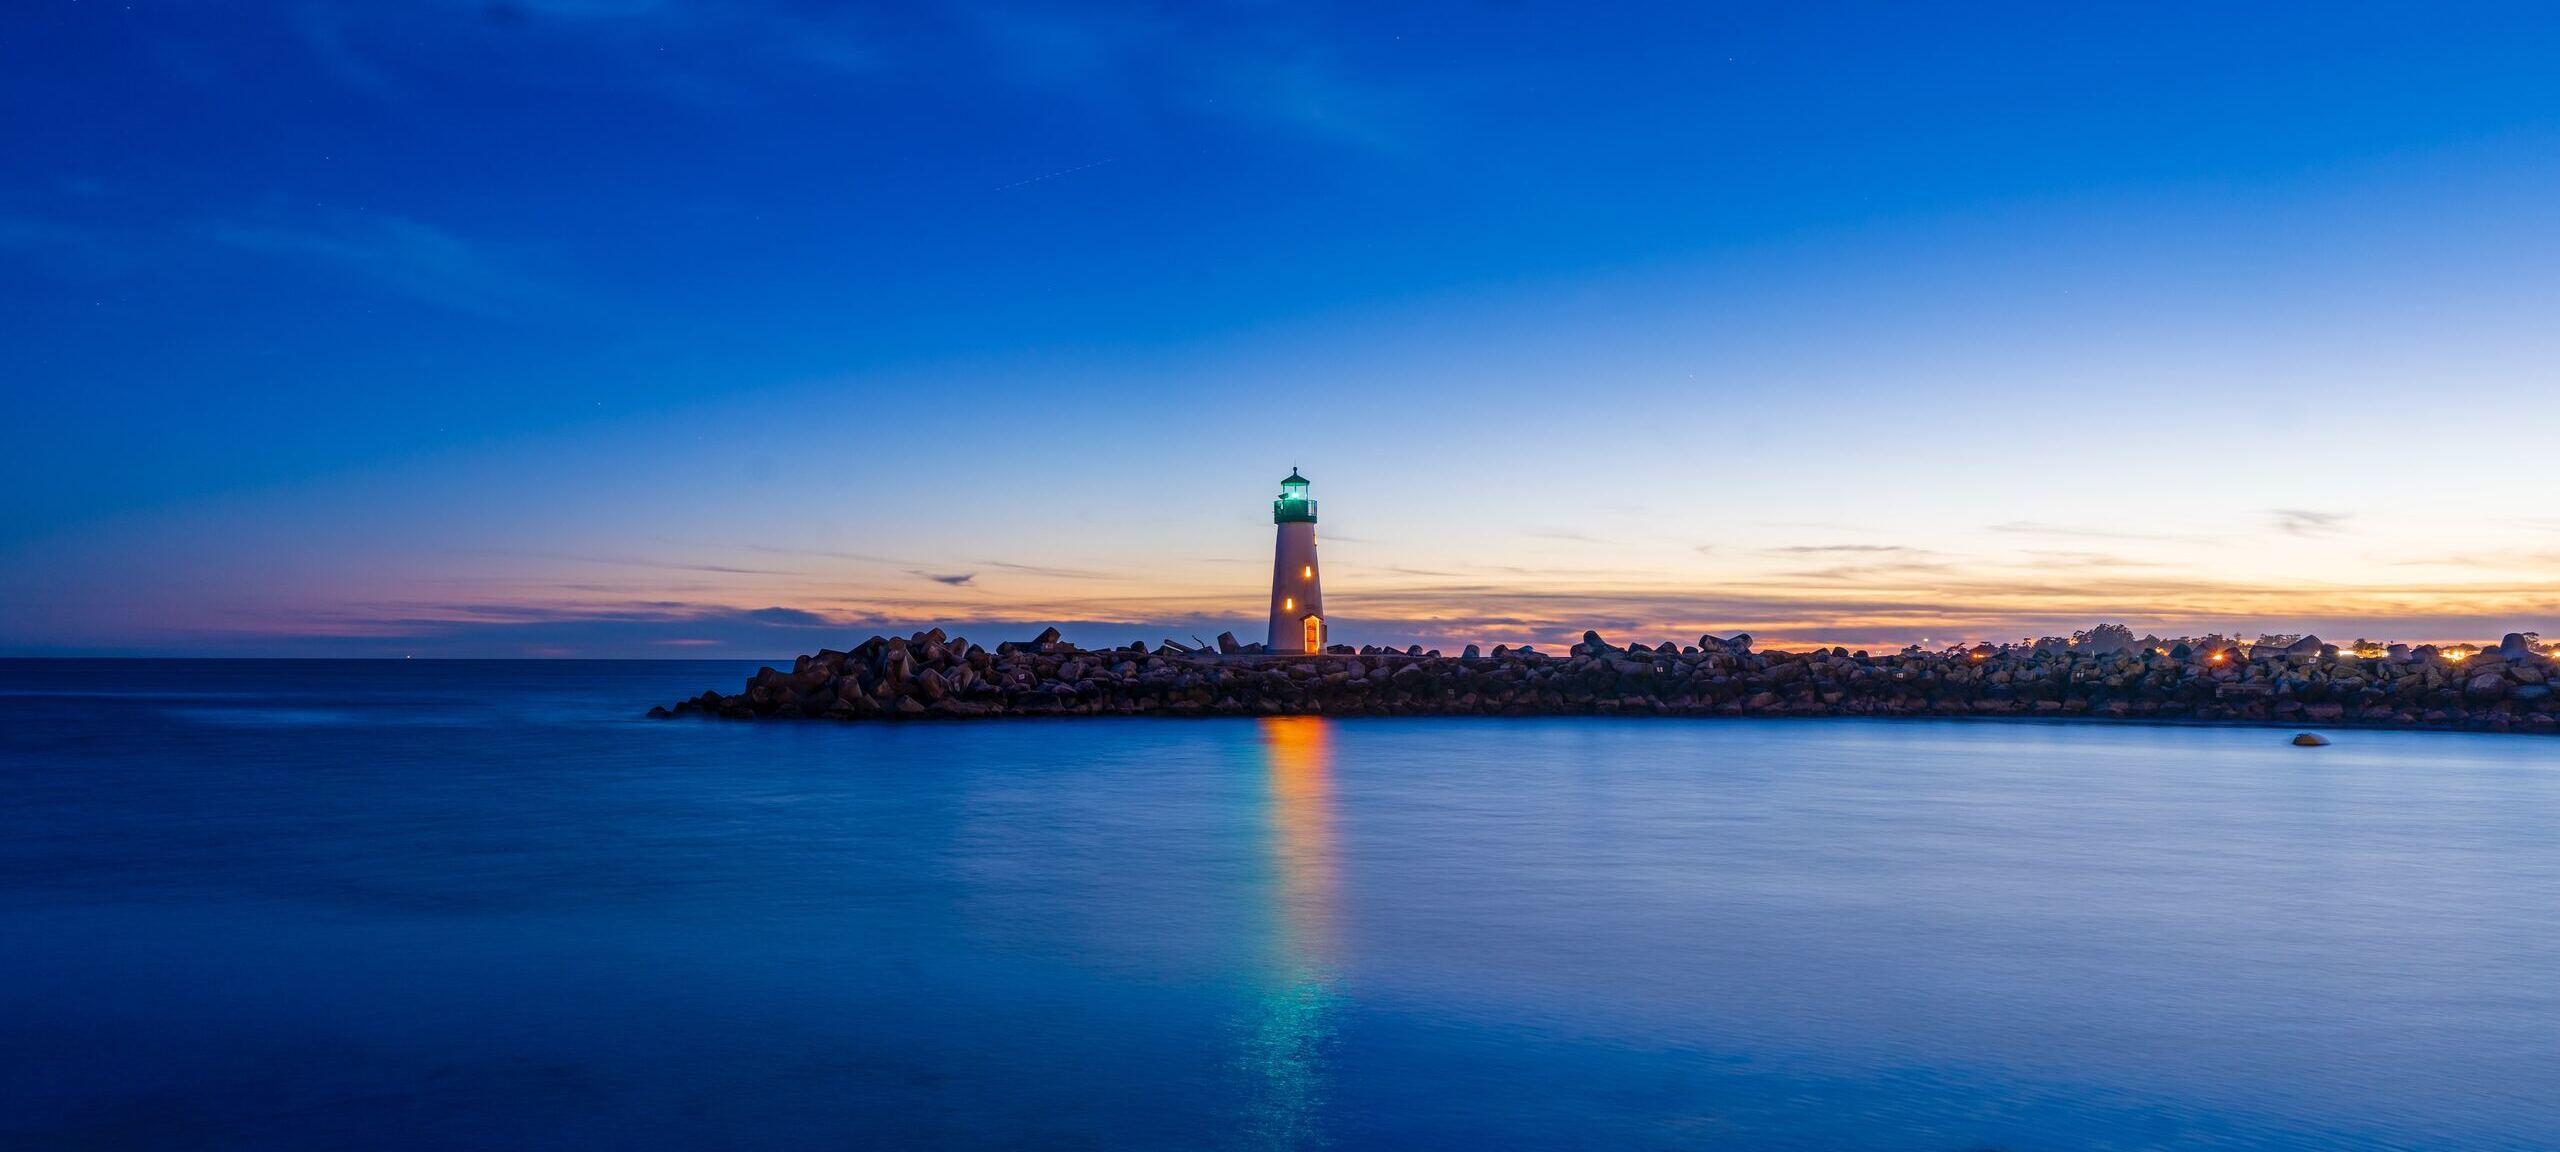 Historic lighthouse during sunset in Santa Cruz, CA. Photo by Joseph Sintum on Unsplash